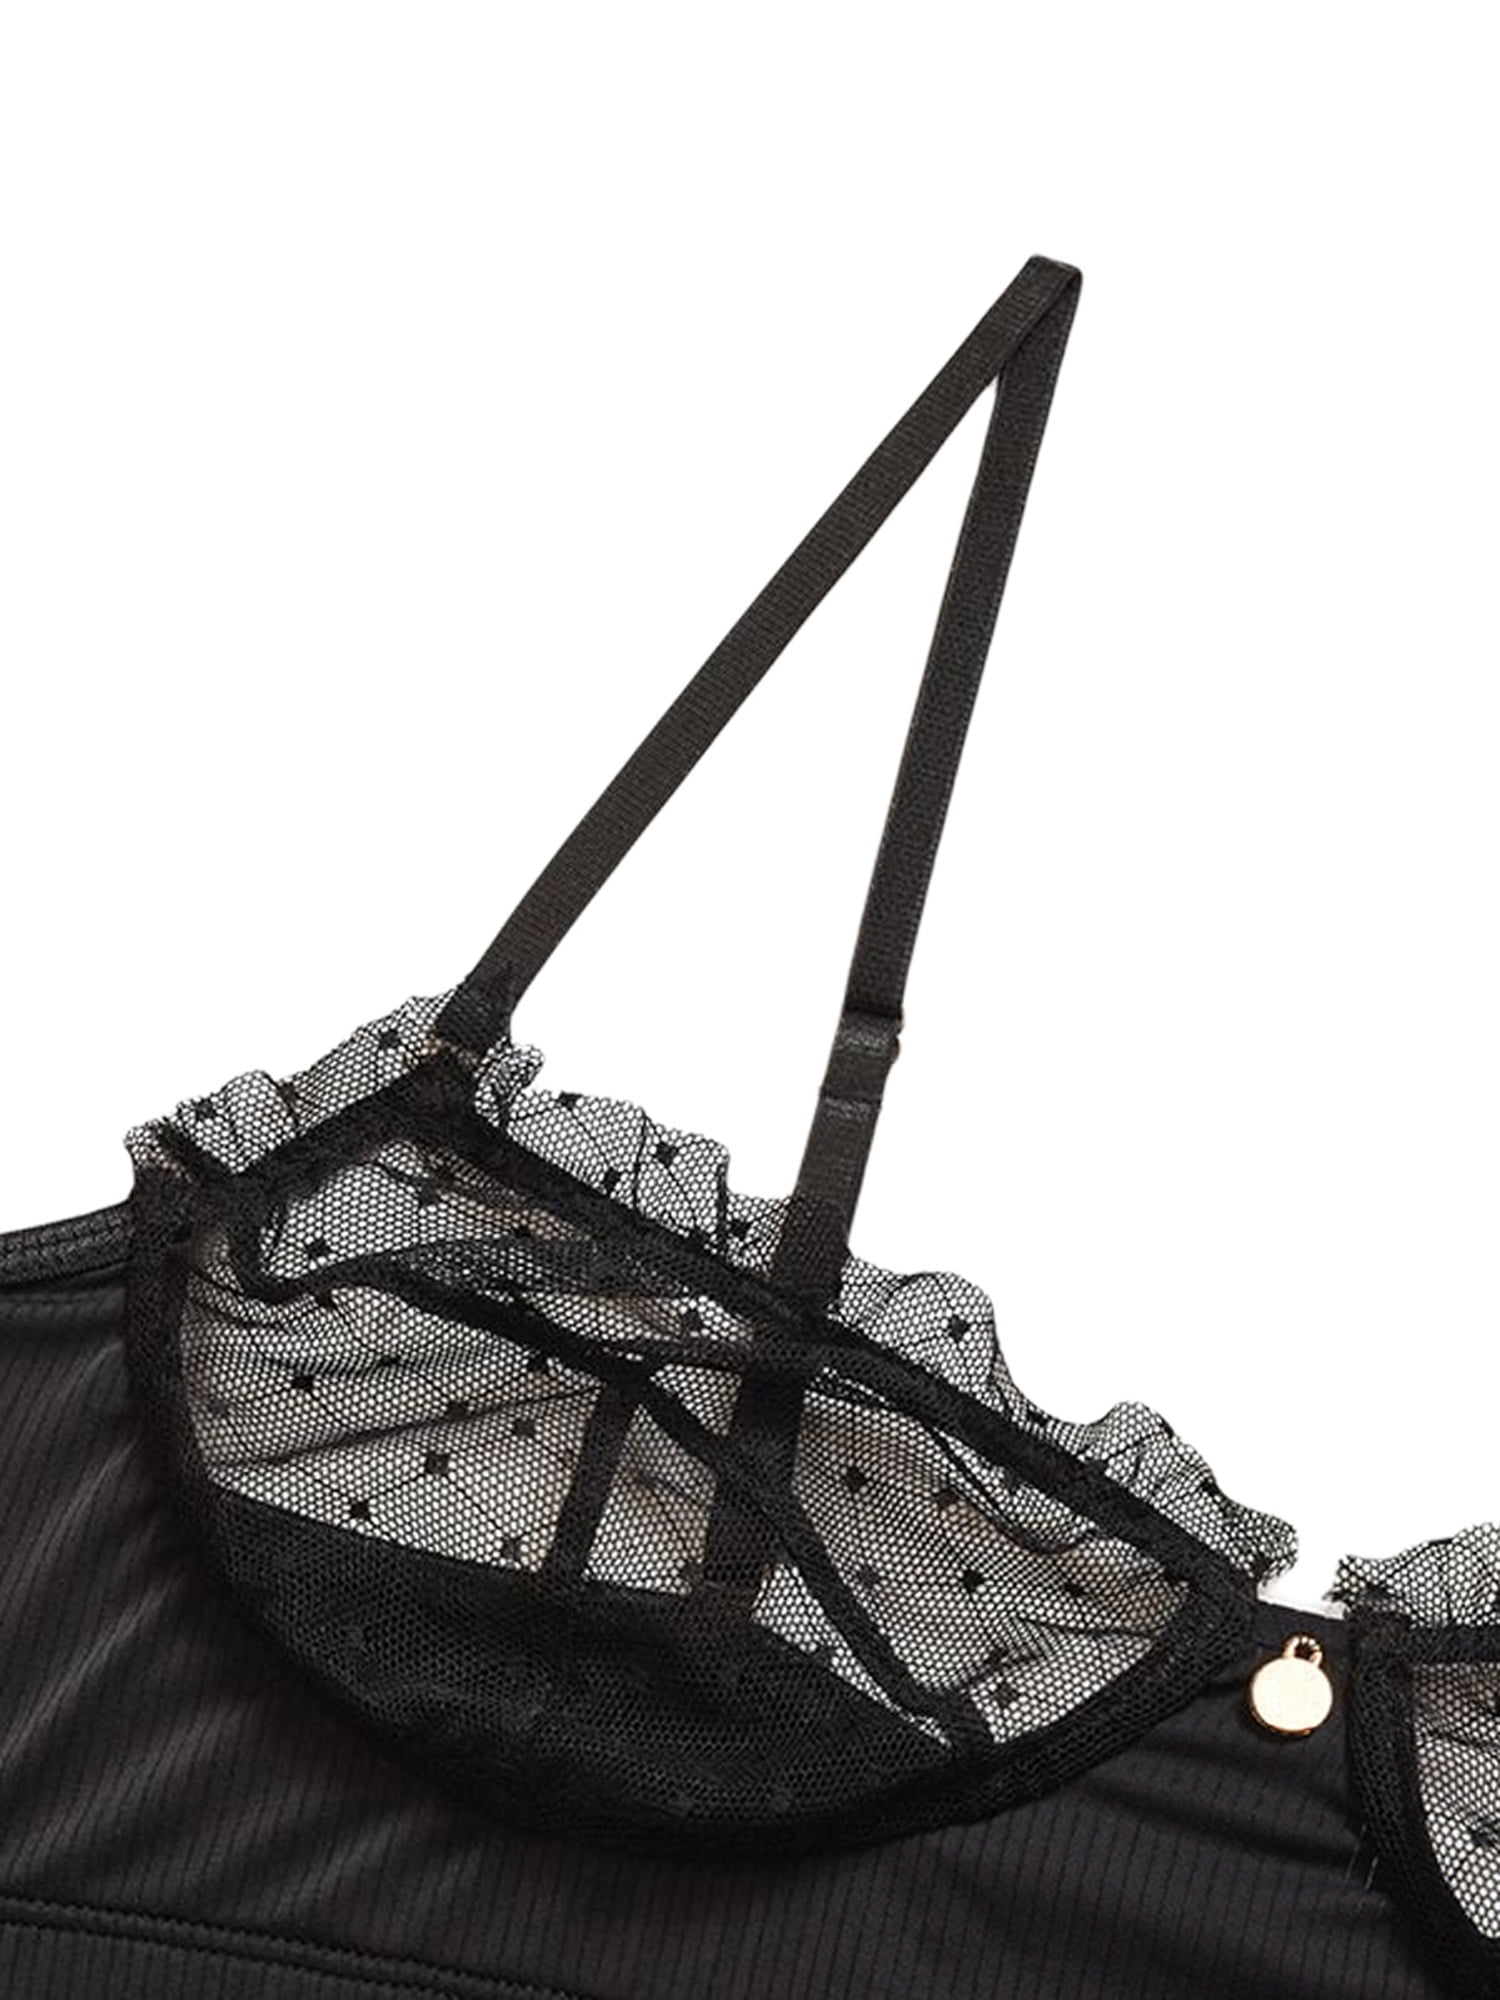 LSFYSZD Women's Sexy 2Pcs Lingerie Sets Ladies Lace See-through Push Up Bra  + Black Thong